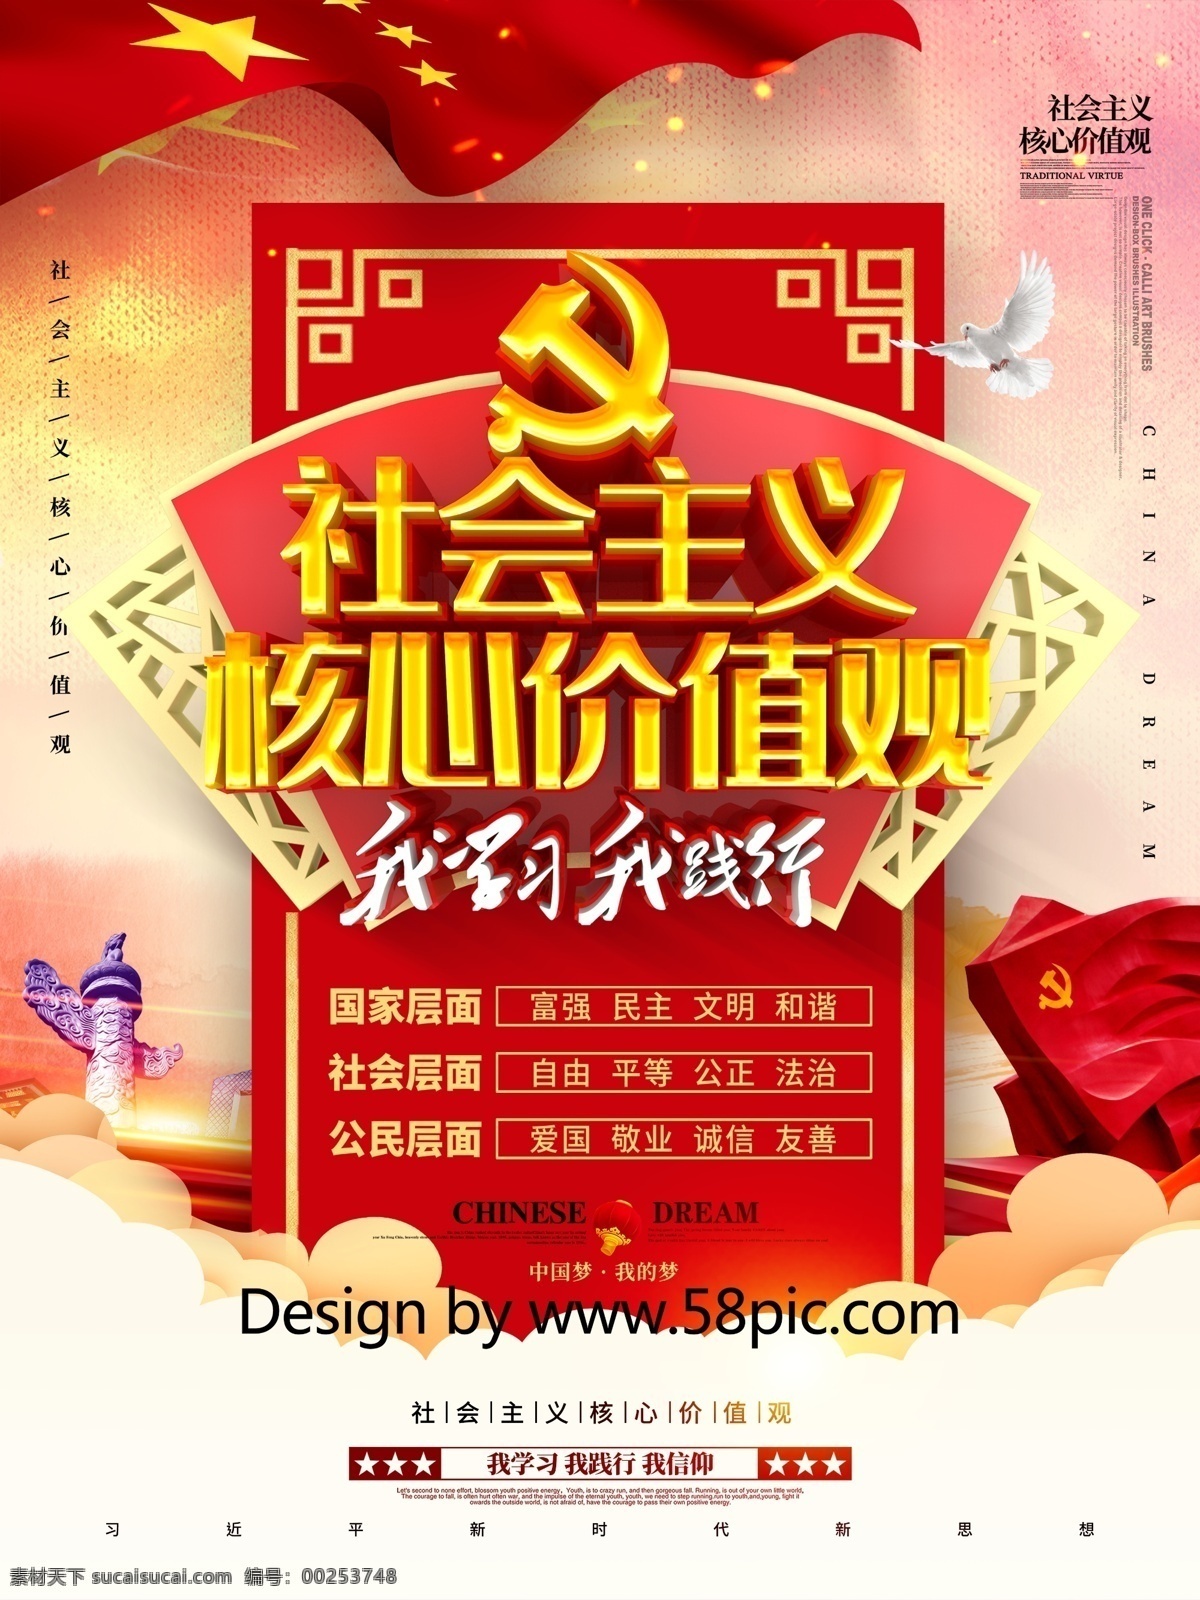 c4d 创意 党建 立体 社会主义 核心 价值观 海报 核心价值观 展板 价值观海报 价值观展板 价值观挂画 价值观图 图解价值观 中国梦 文化